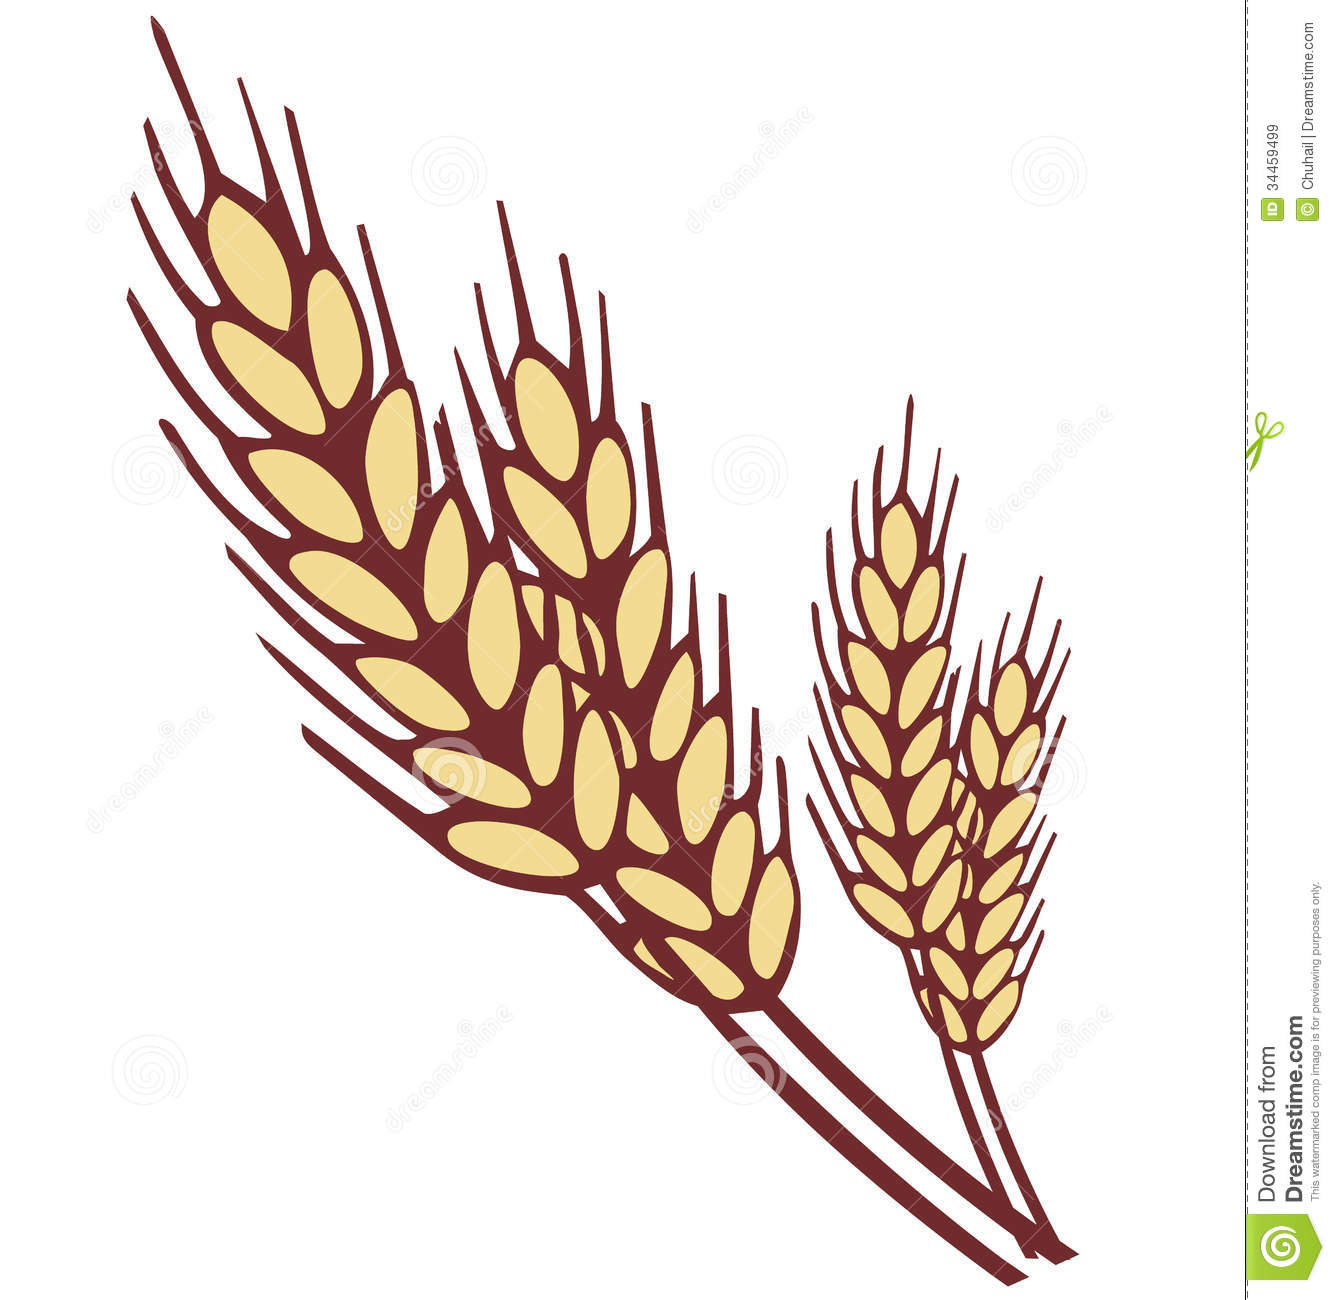 grains clipart wheat stock